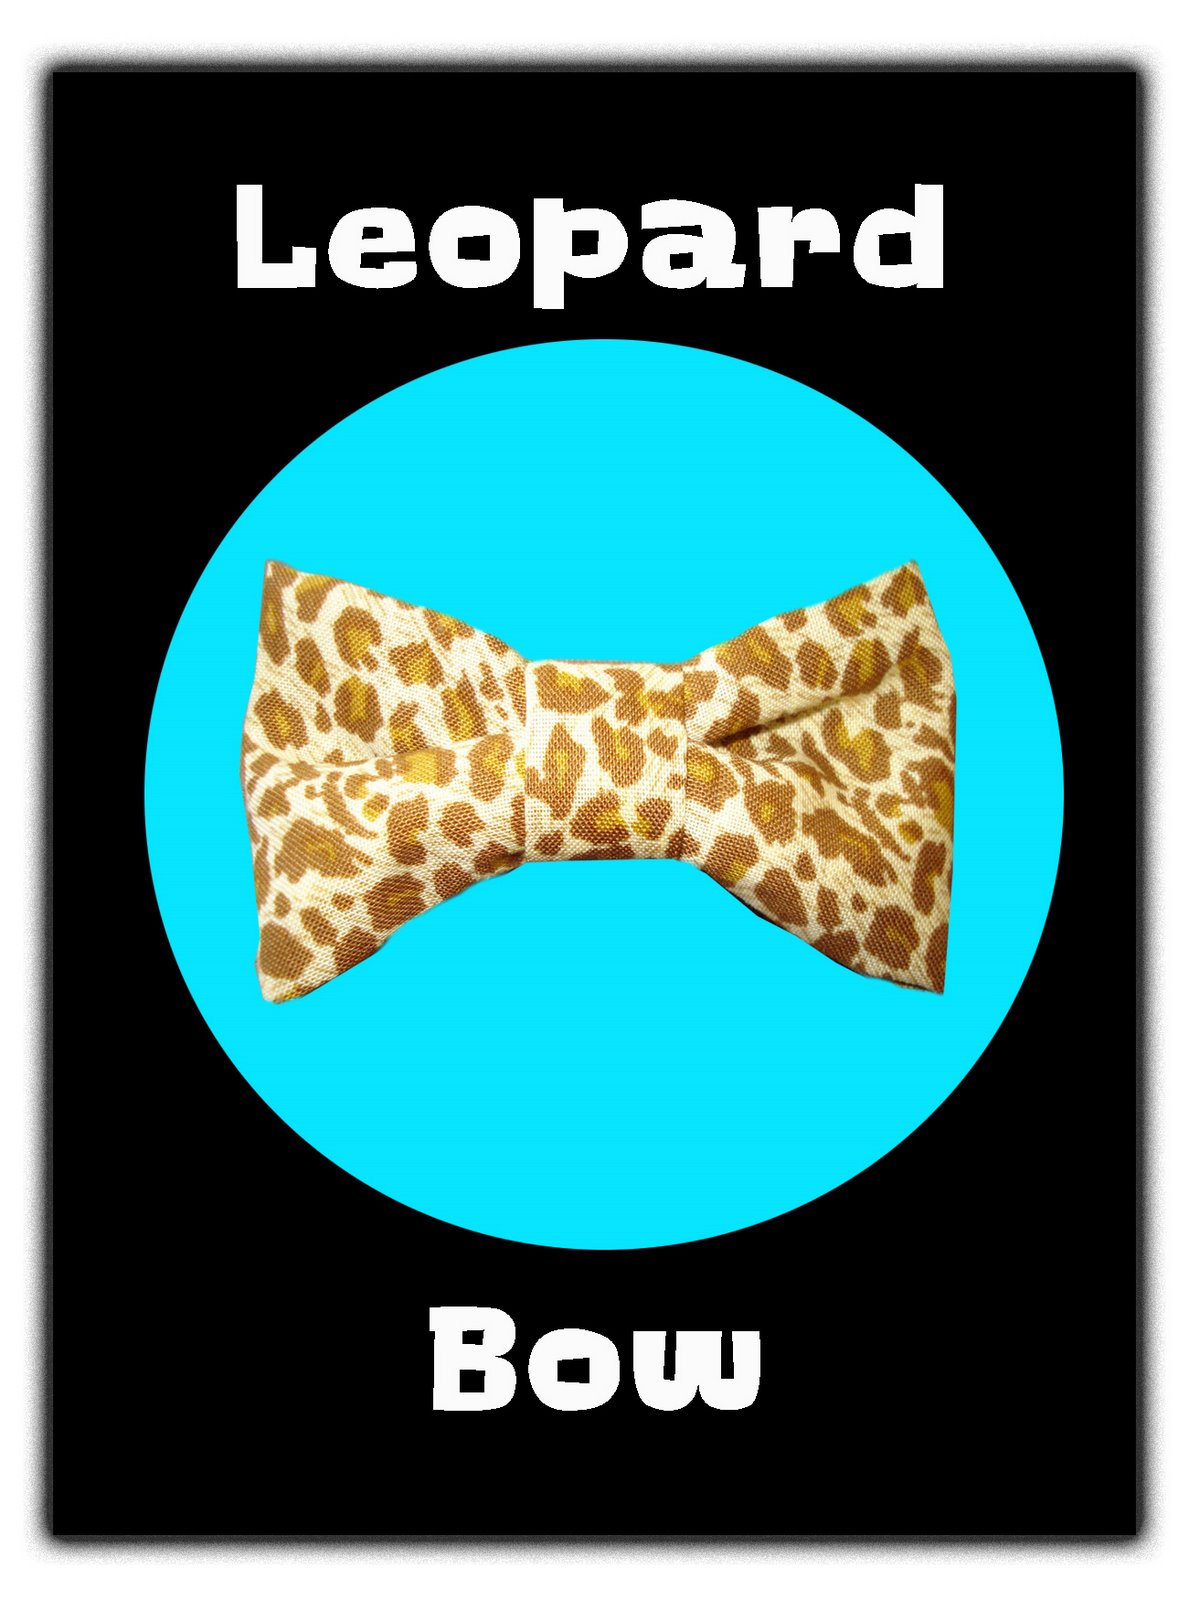 [leopardbow.jpg]